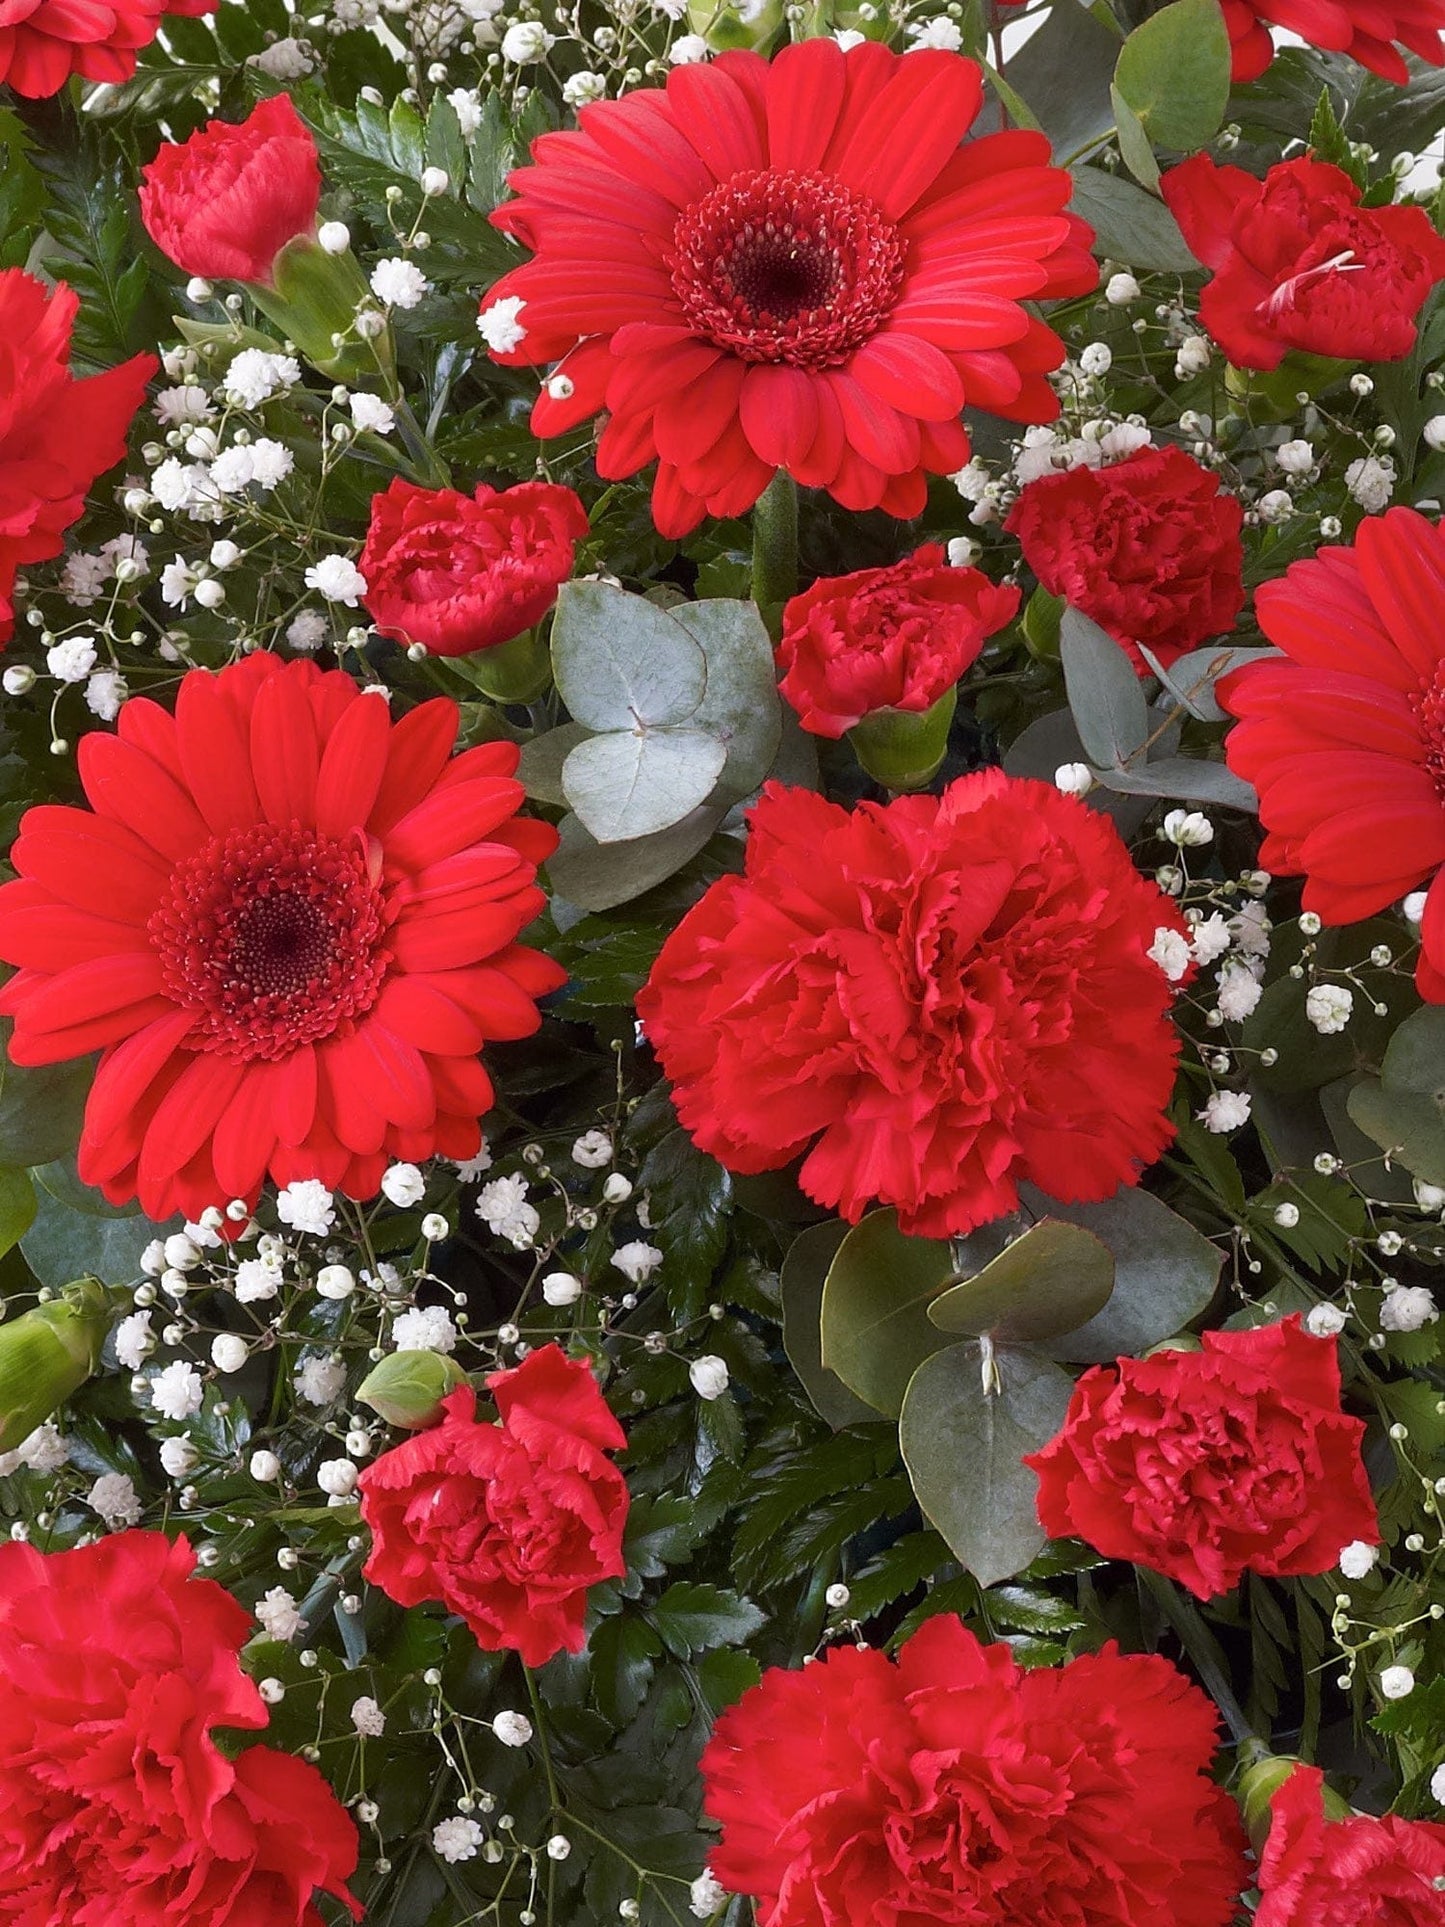 Carnation and Germini Teardrop Spray Red - Harrys Flowers London